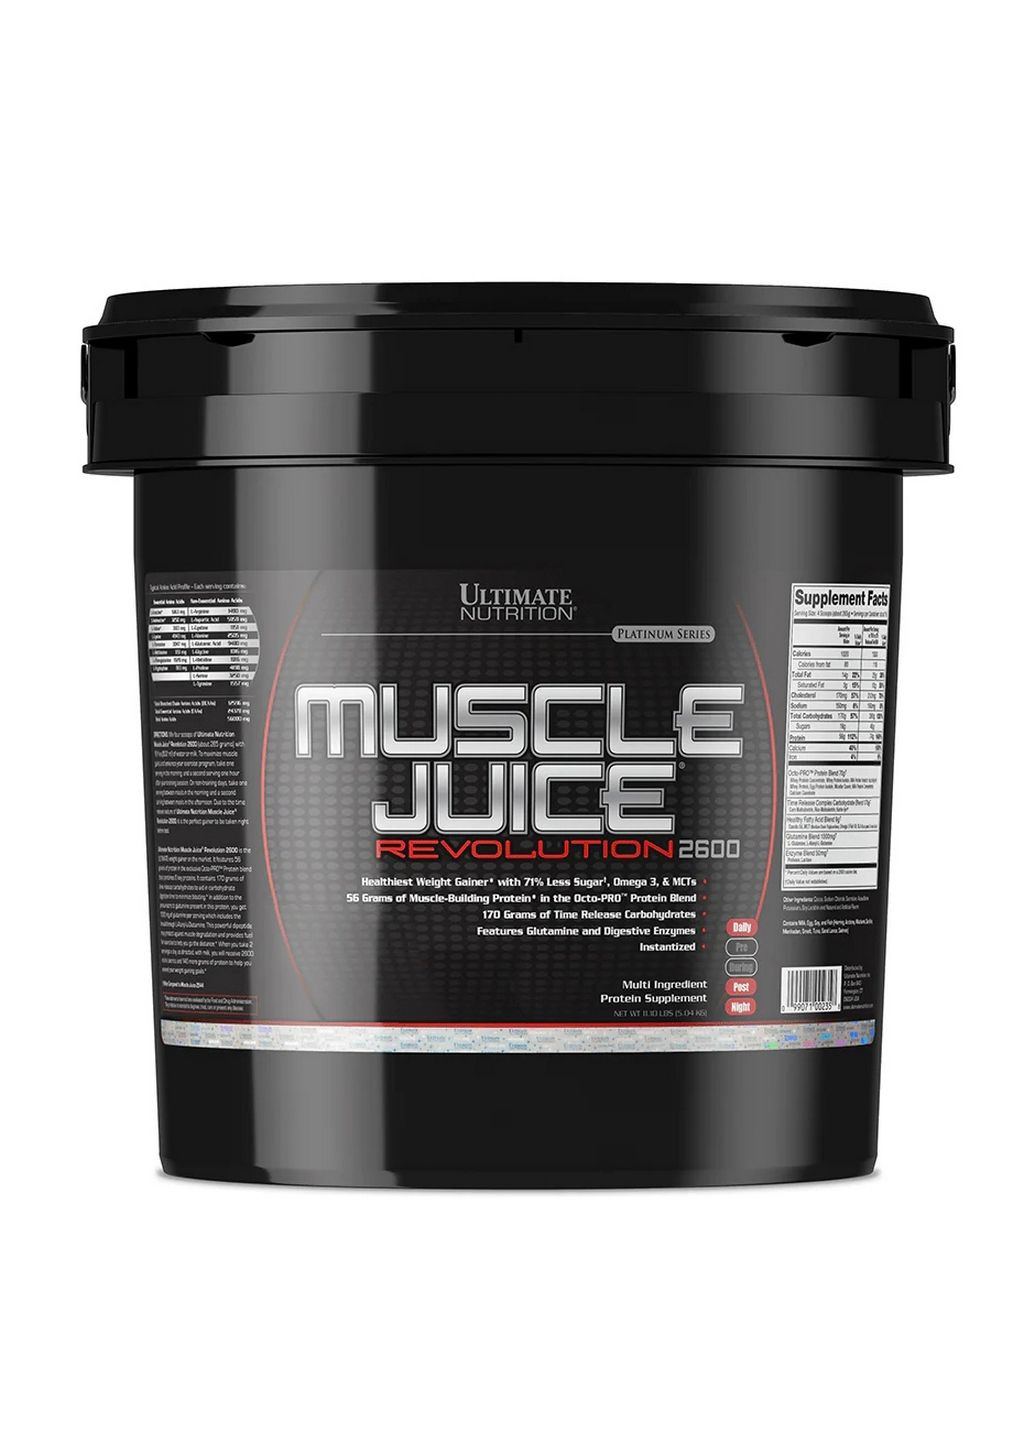 Гейнер Ultimate Muscle Juice Revolution 2600, 5 кг Ваниль Ultimate Nutrition (293420800)